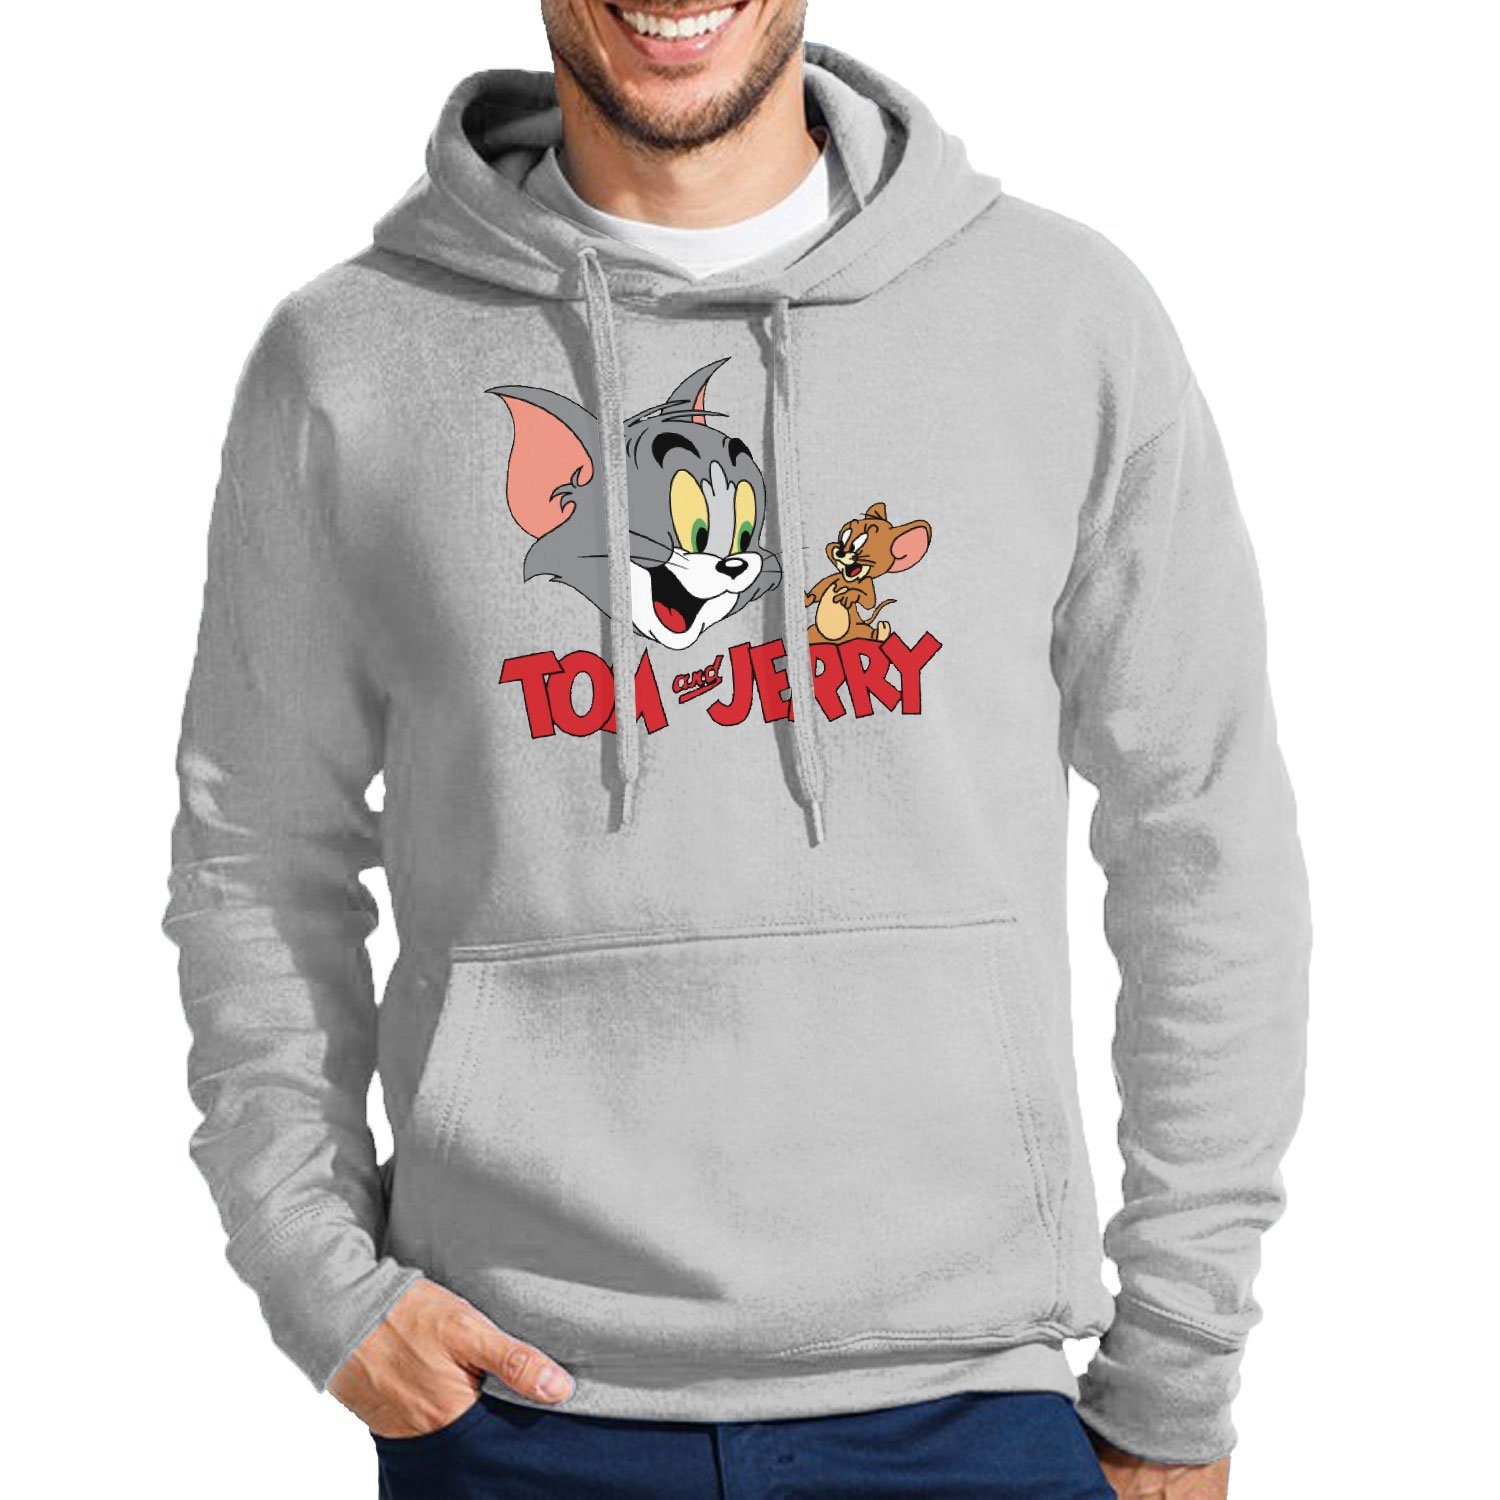 Blondie & Brownie Hoodie Herren Tom Jerry Cartoon Katze Maus Mit Kapuze Grau